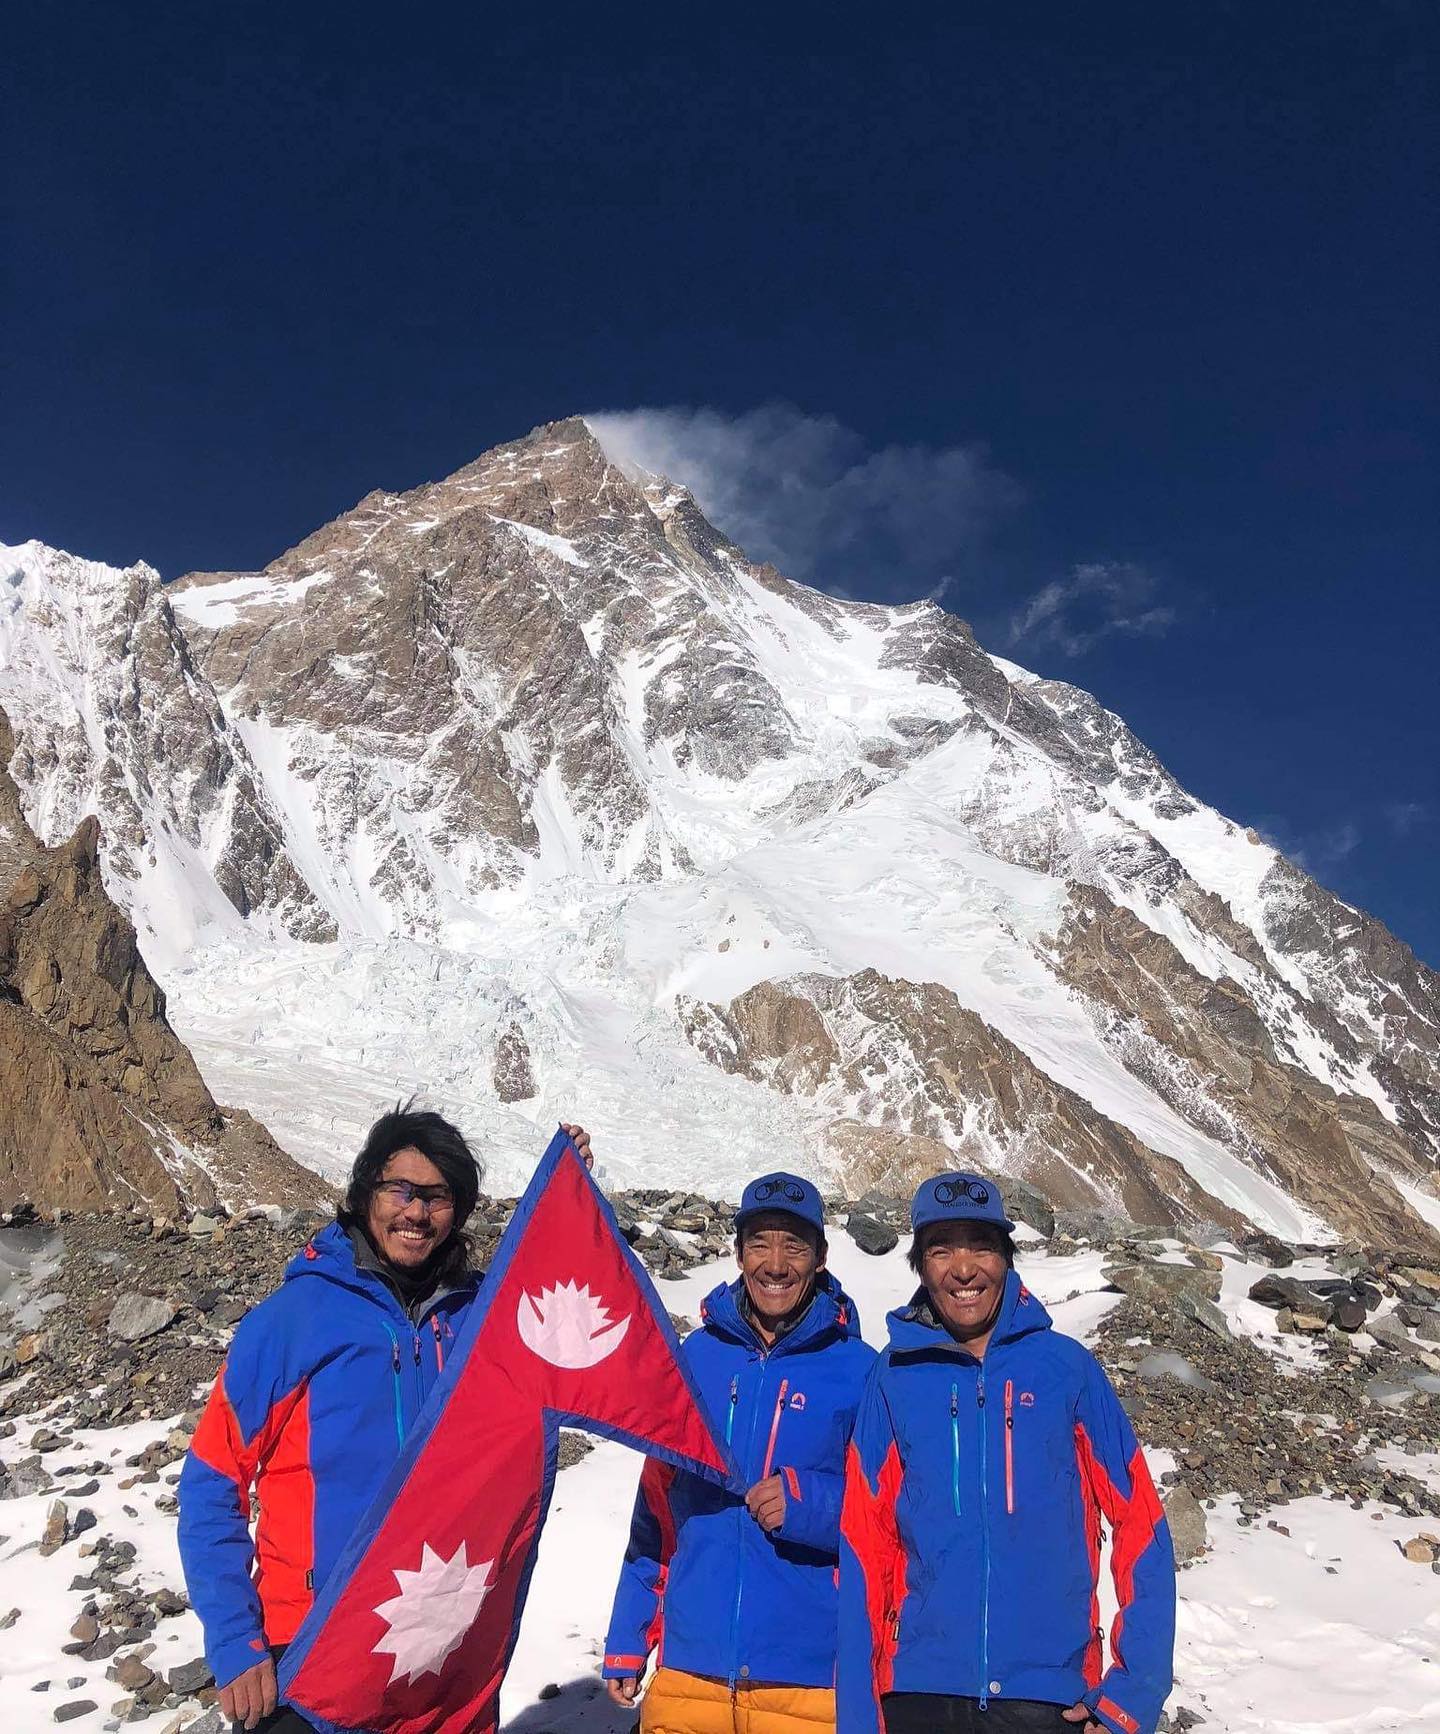 Мингма Галйе Шерпа (Mingma Gyalje Sherpa) - руководитель команды, Дава Тенцинг Шерпа (Dawa Tenzing Sherpa), Килу Пемба Шерпа (Kilu Pemba Sherpa) на фоне восьмитысячника К2